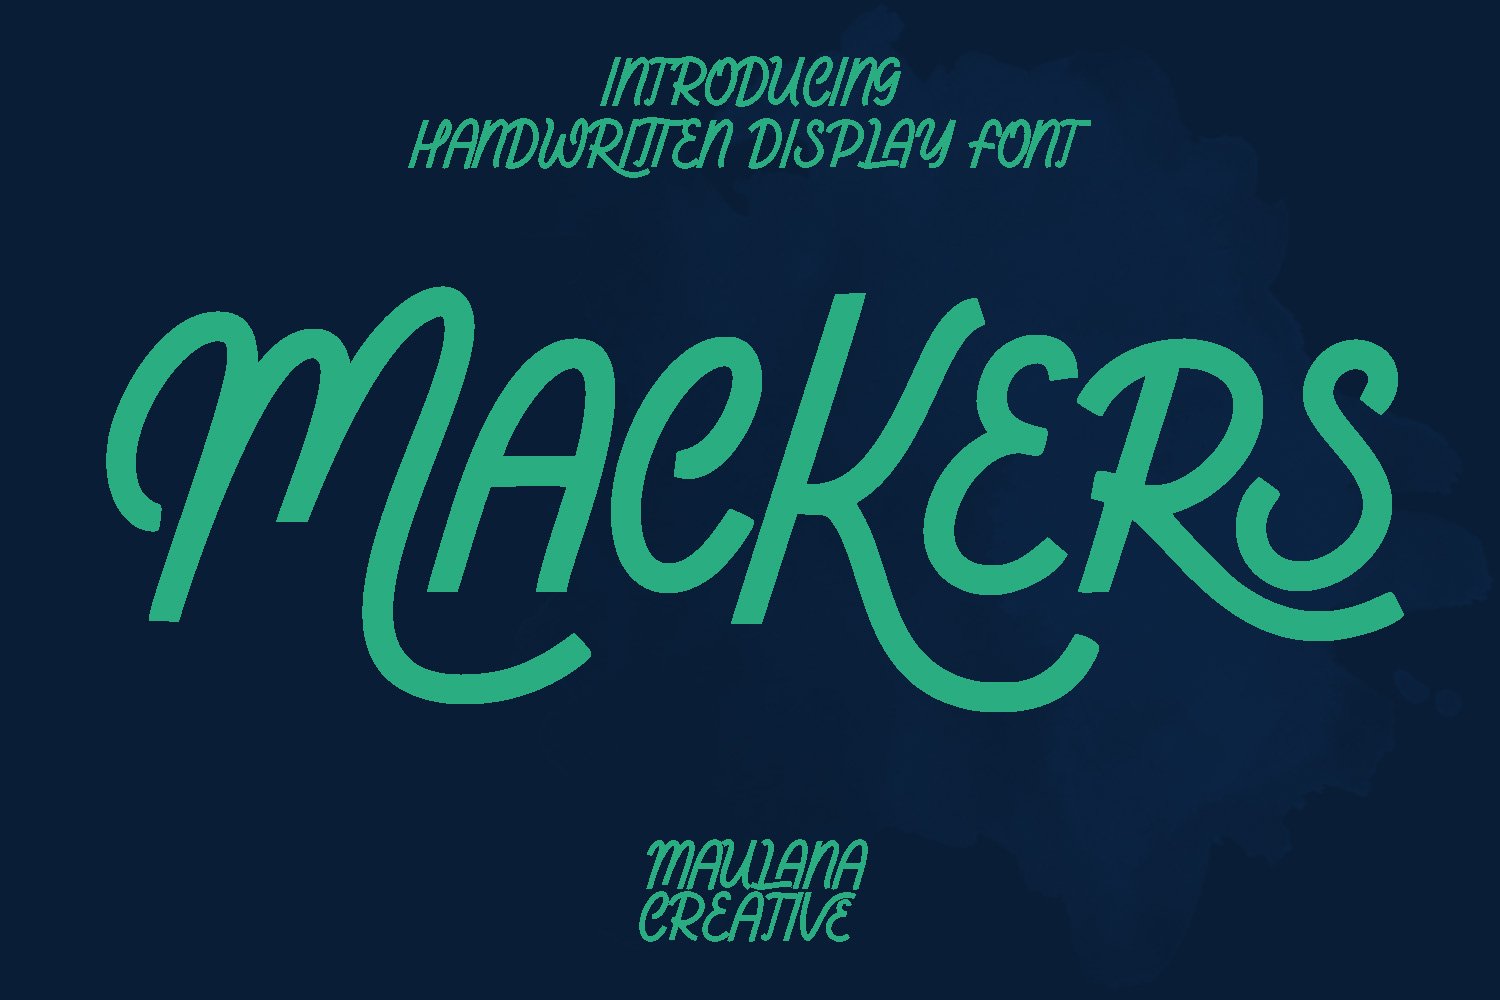 Mackers Handwritten Display Font cover image.